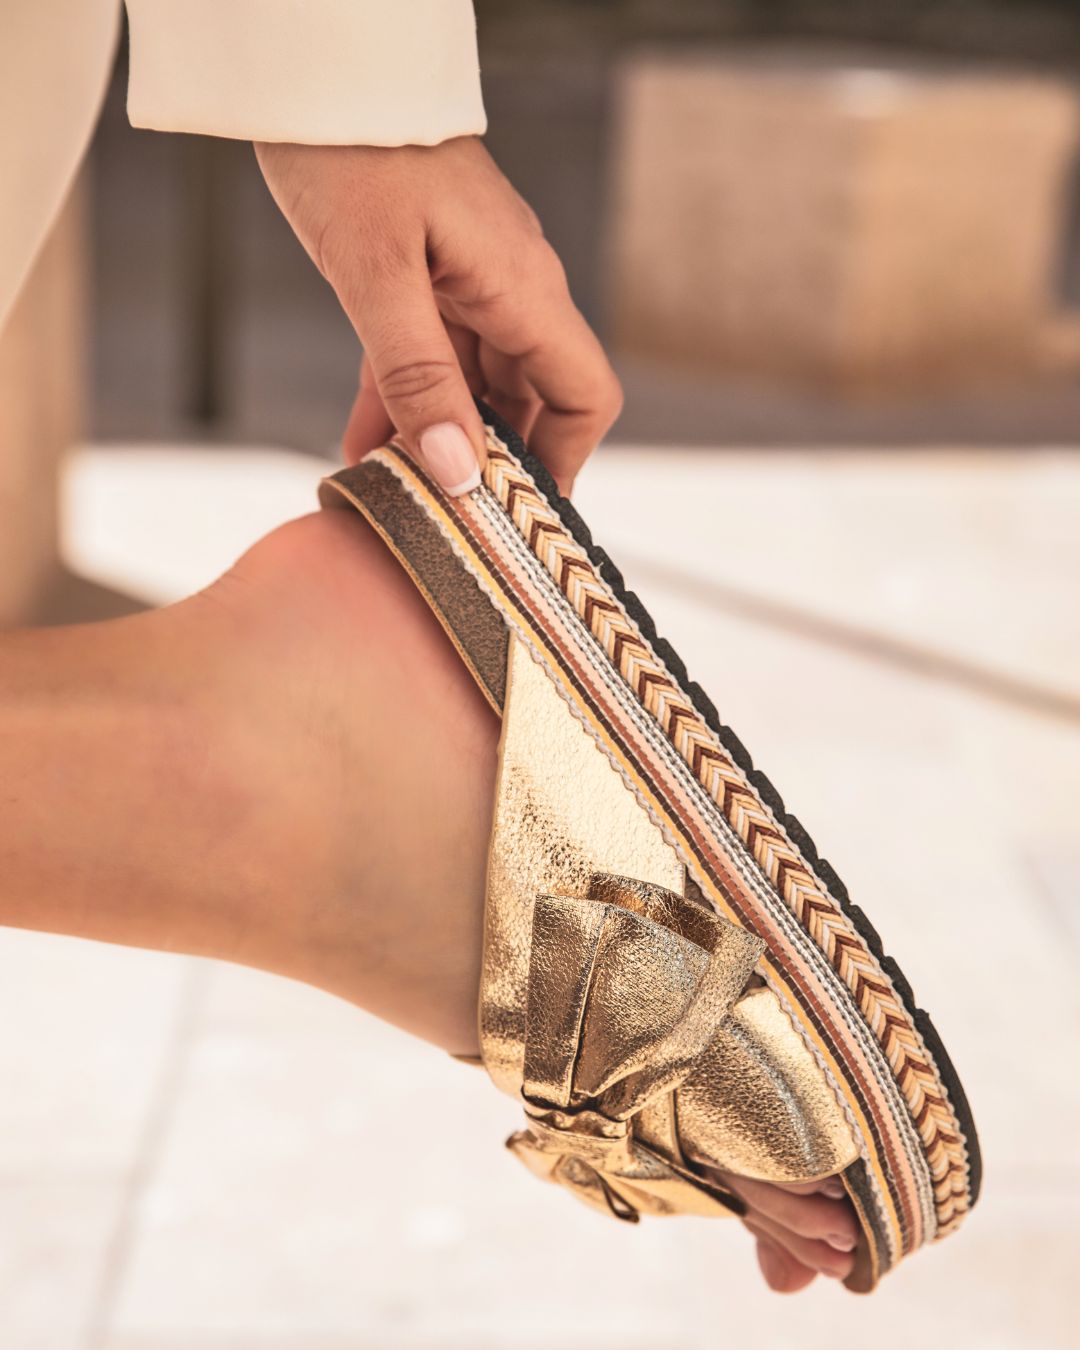 Sandale femme plateforme confort doré - Anais - Casualmode.fr